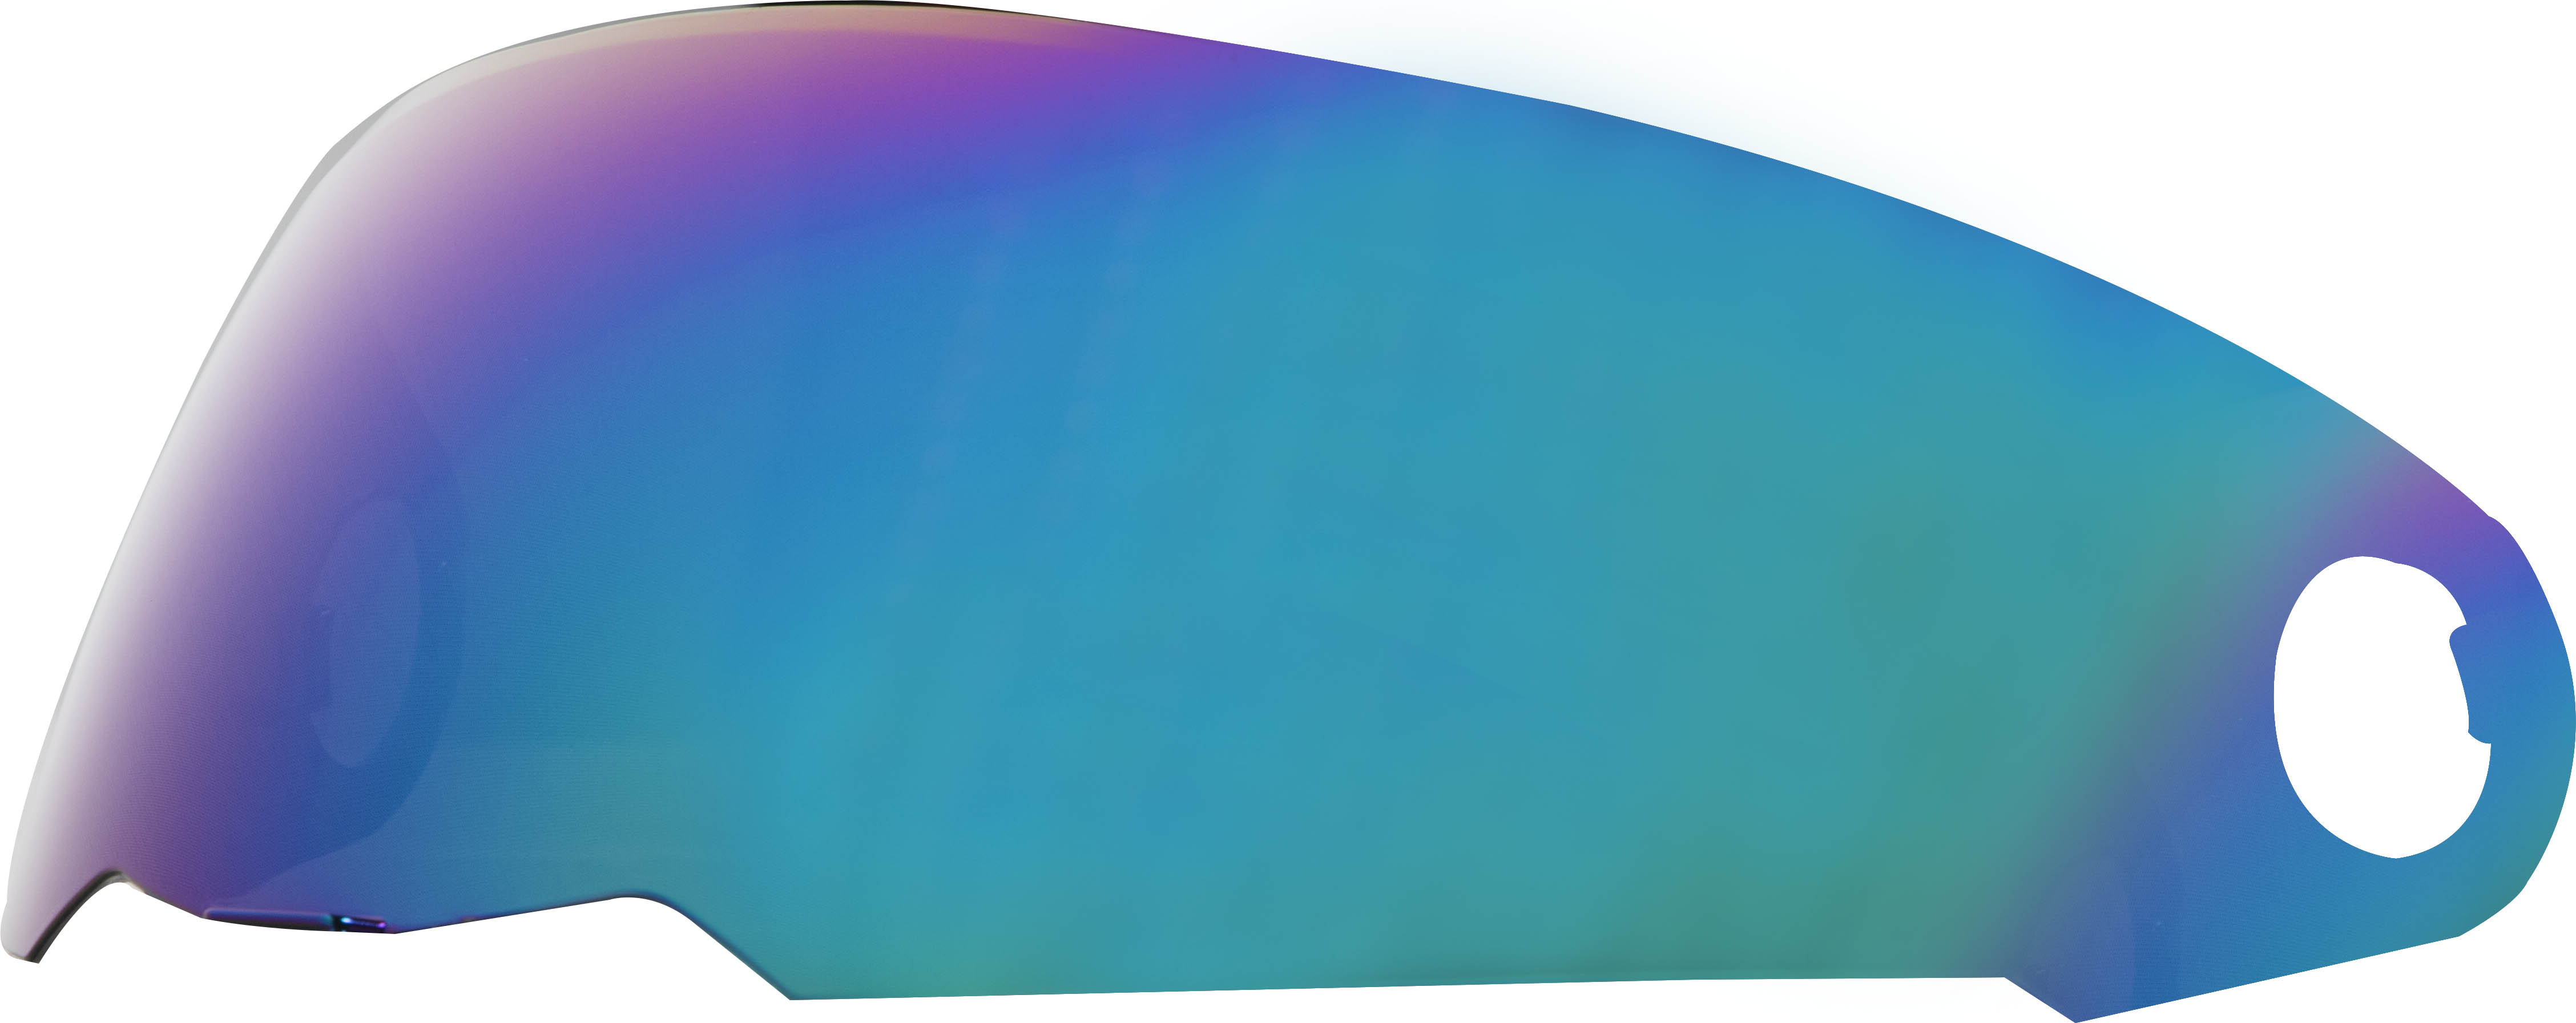 Steelbird Air Rainbow Visor